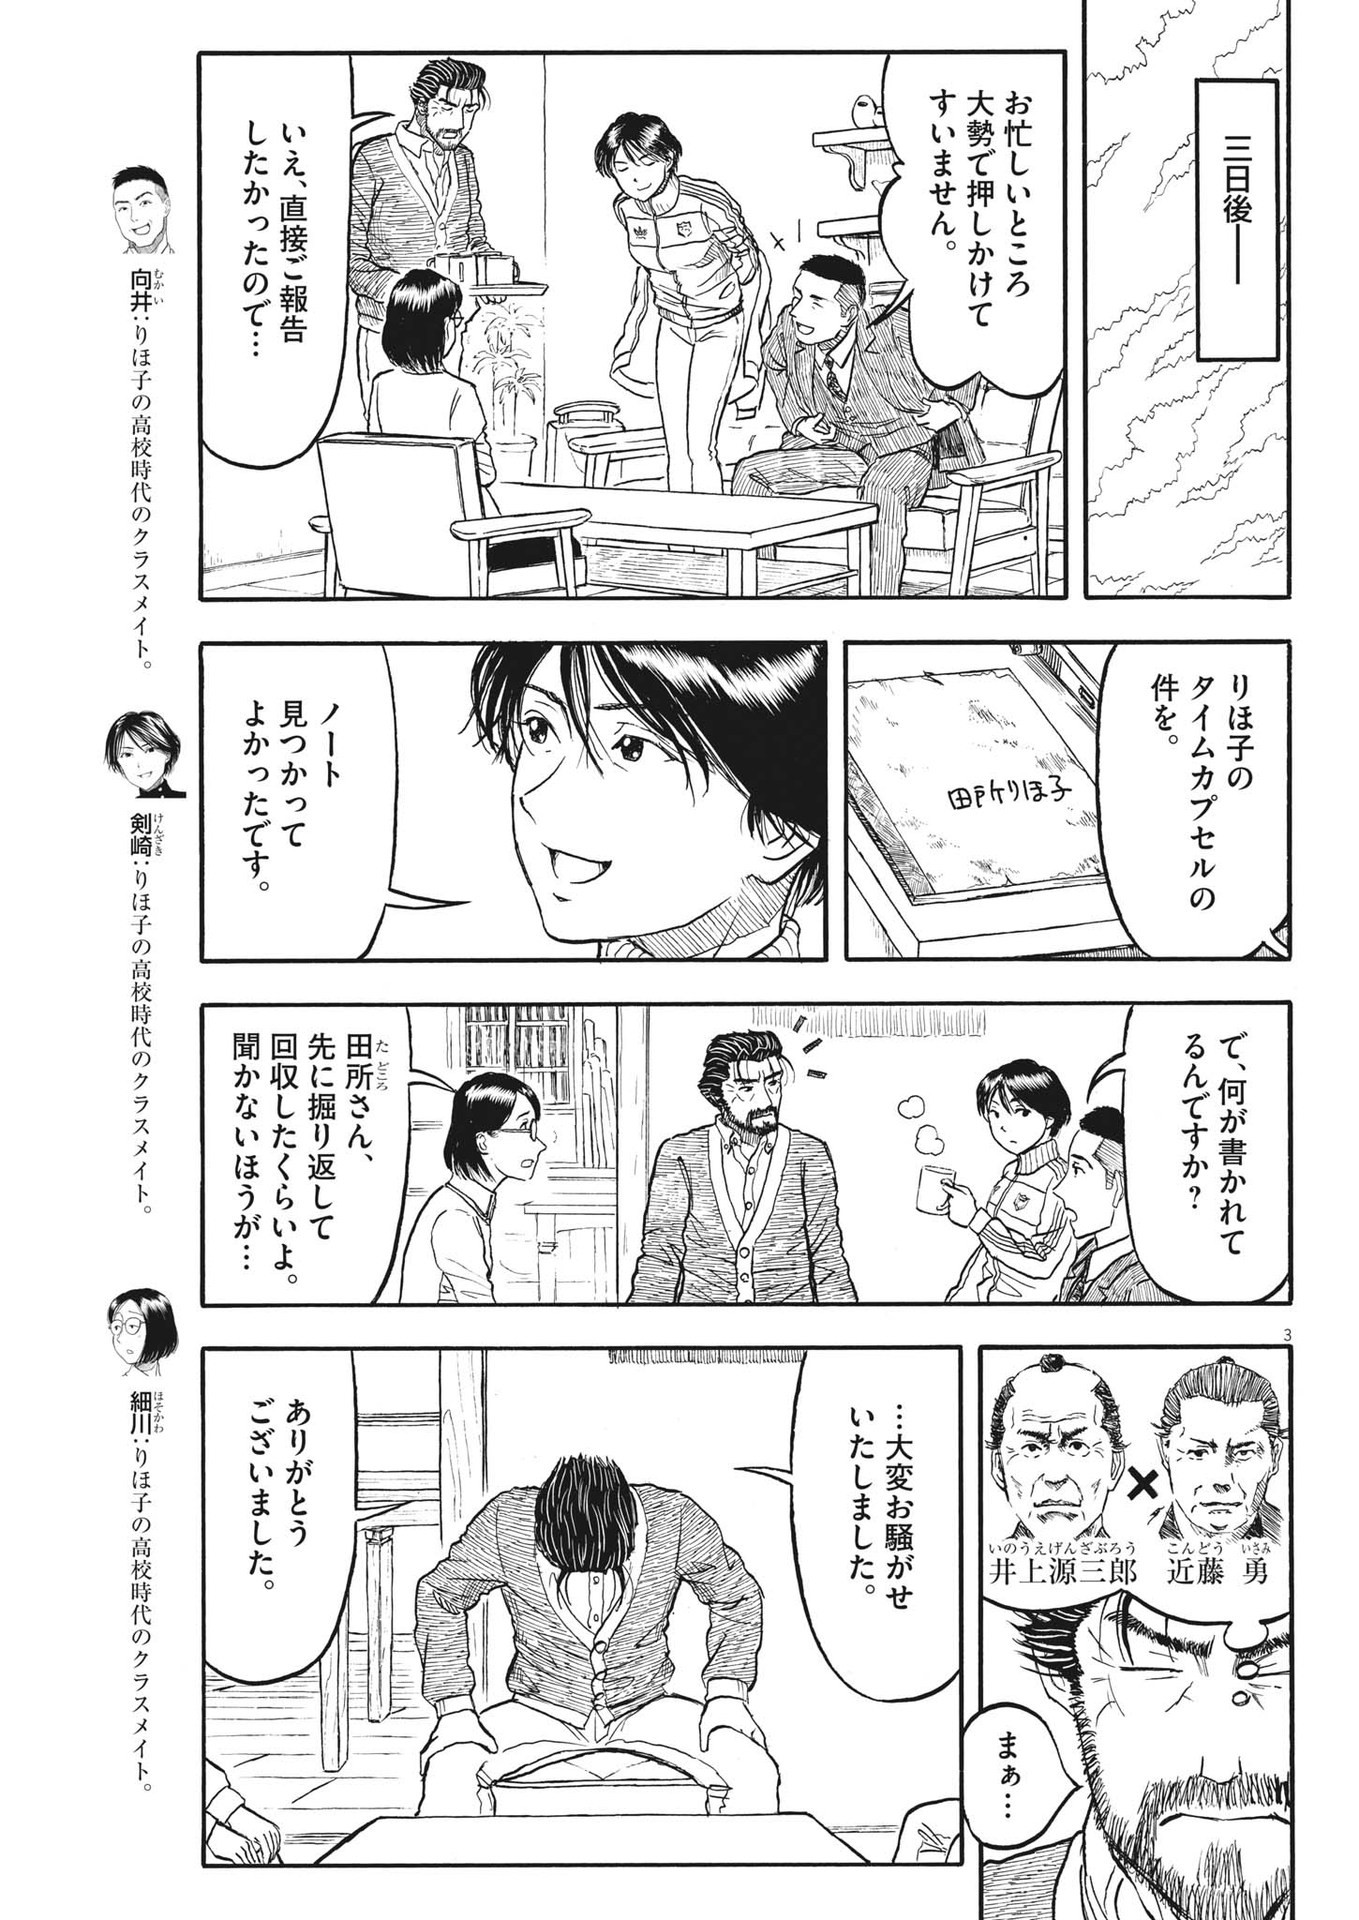 Komegura Fuufu no Recipe-chou - Chapter 30 - Page 3